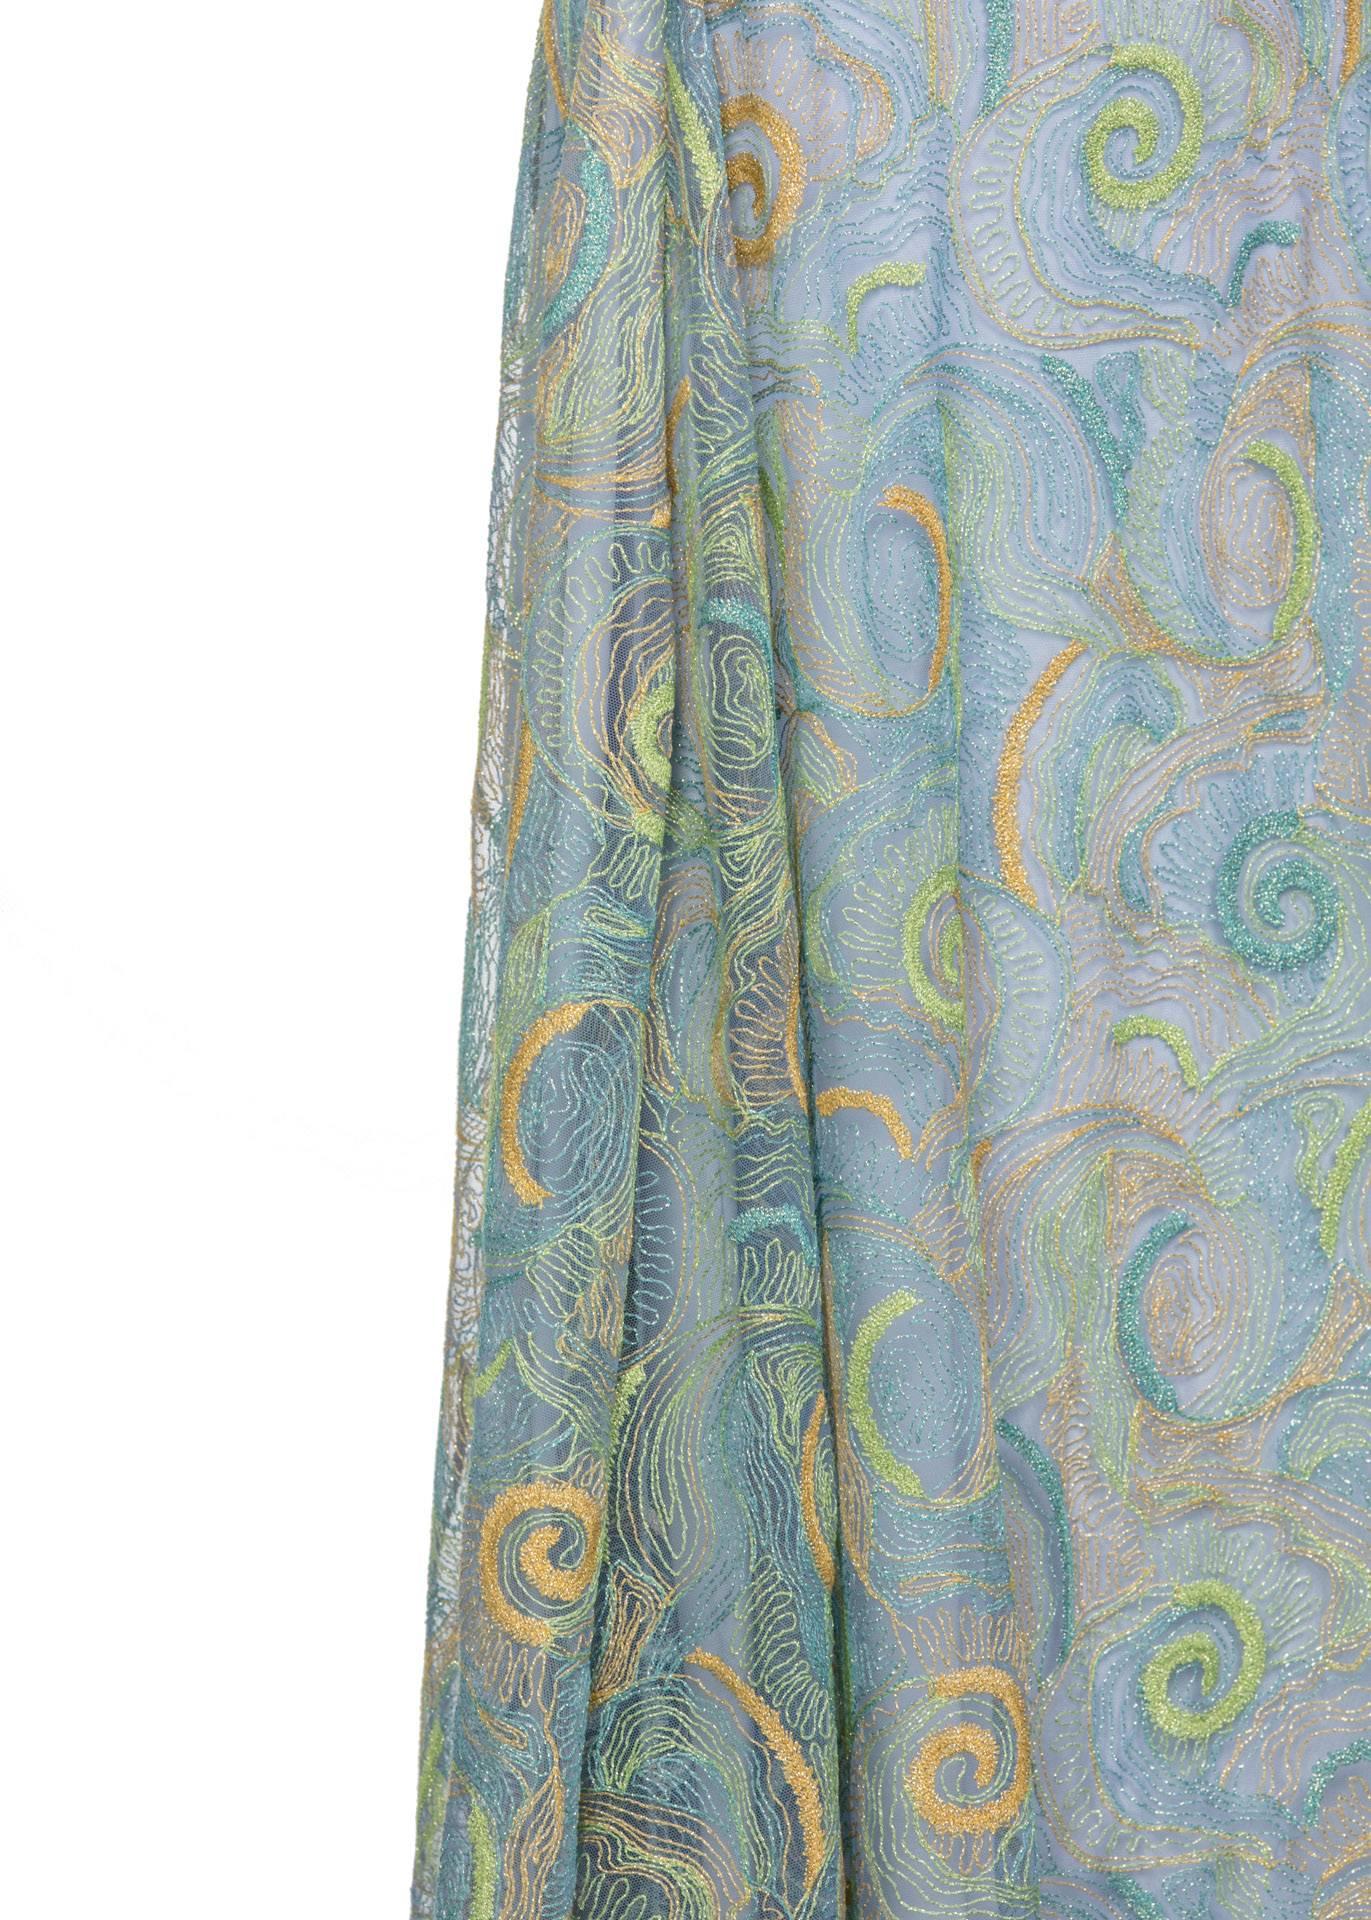 Women's 2102 Rodarte Van Gogh Multicolored Metallic Embroidered Tulle Dress